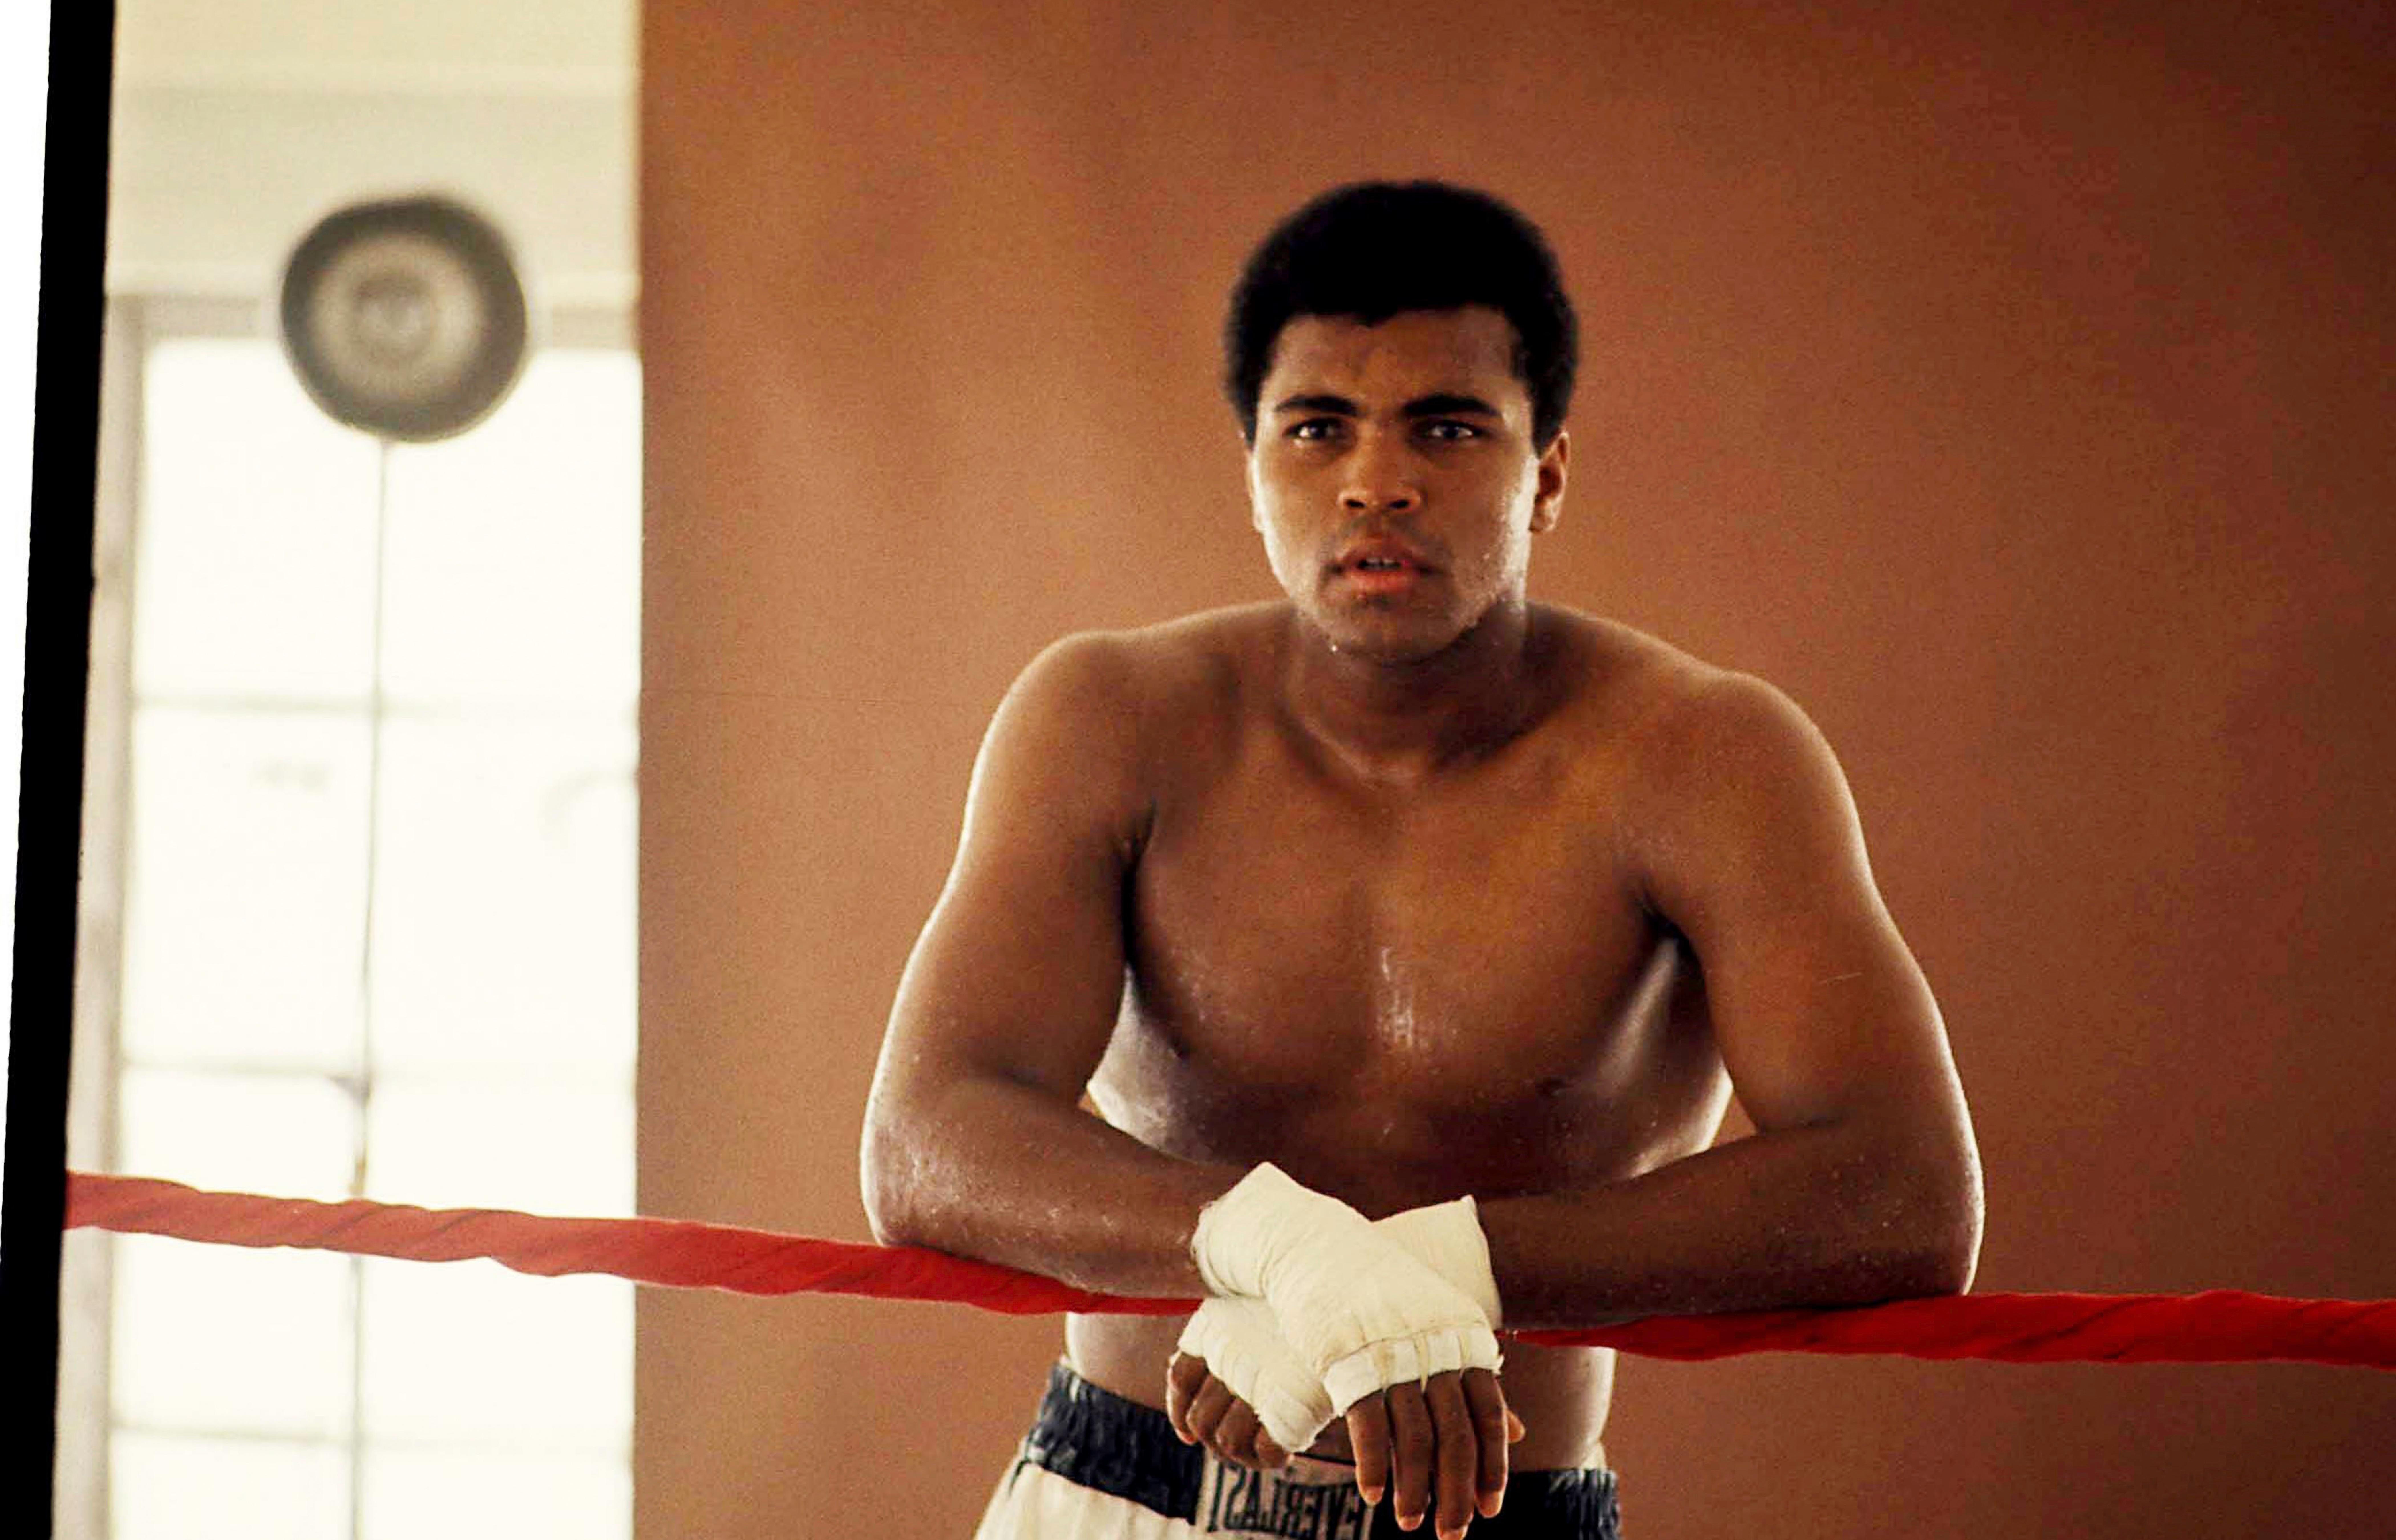 Jeff Joffe Portrait Photograph - Muhammad Ali Training in Florida